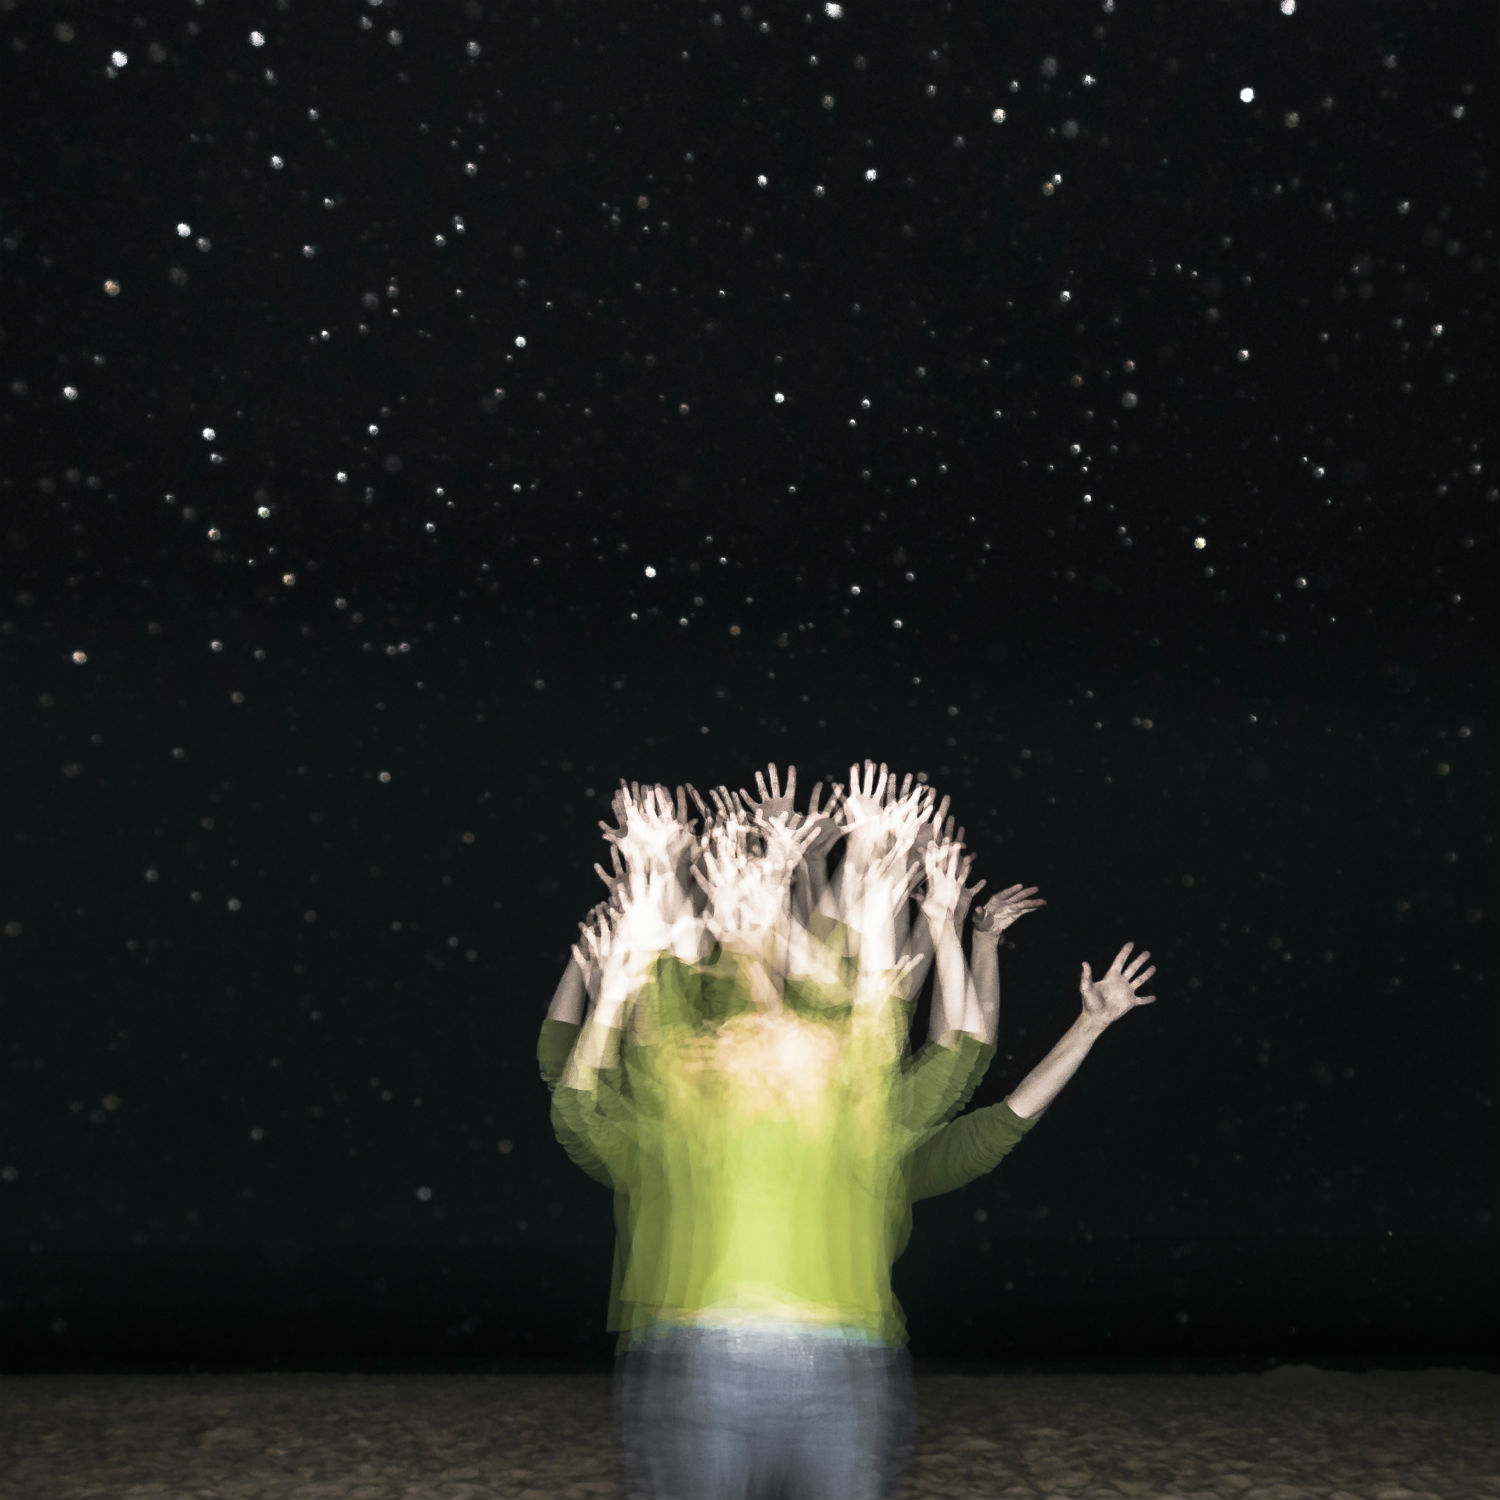 Patrick Lienin photography night sky body movement